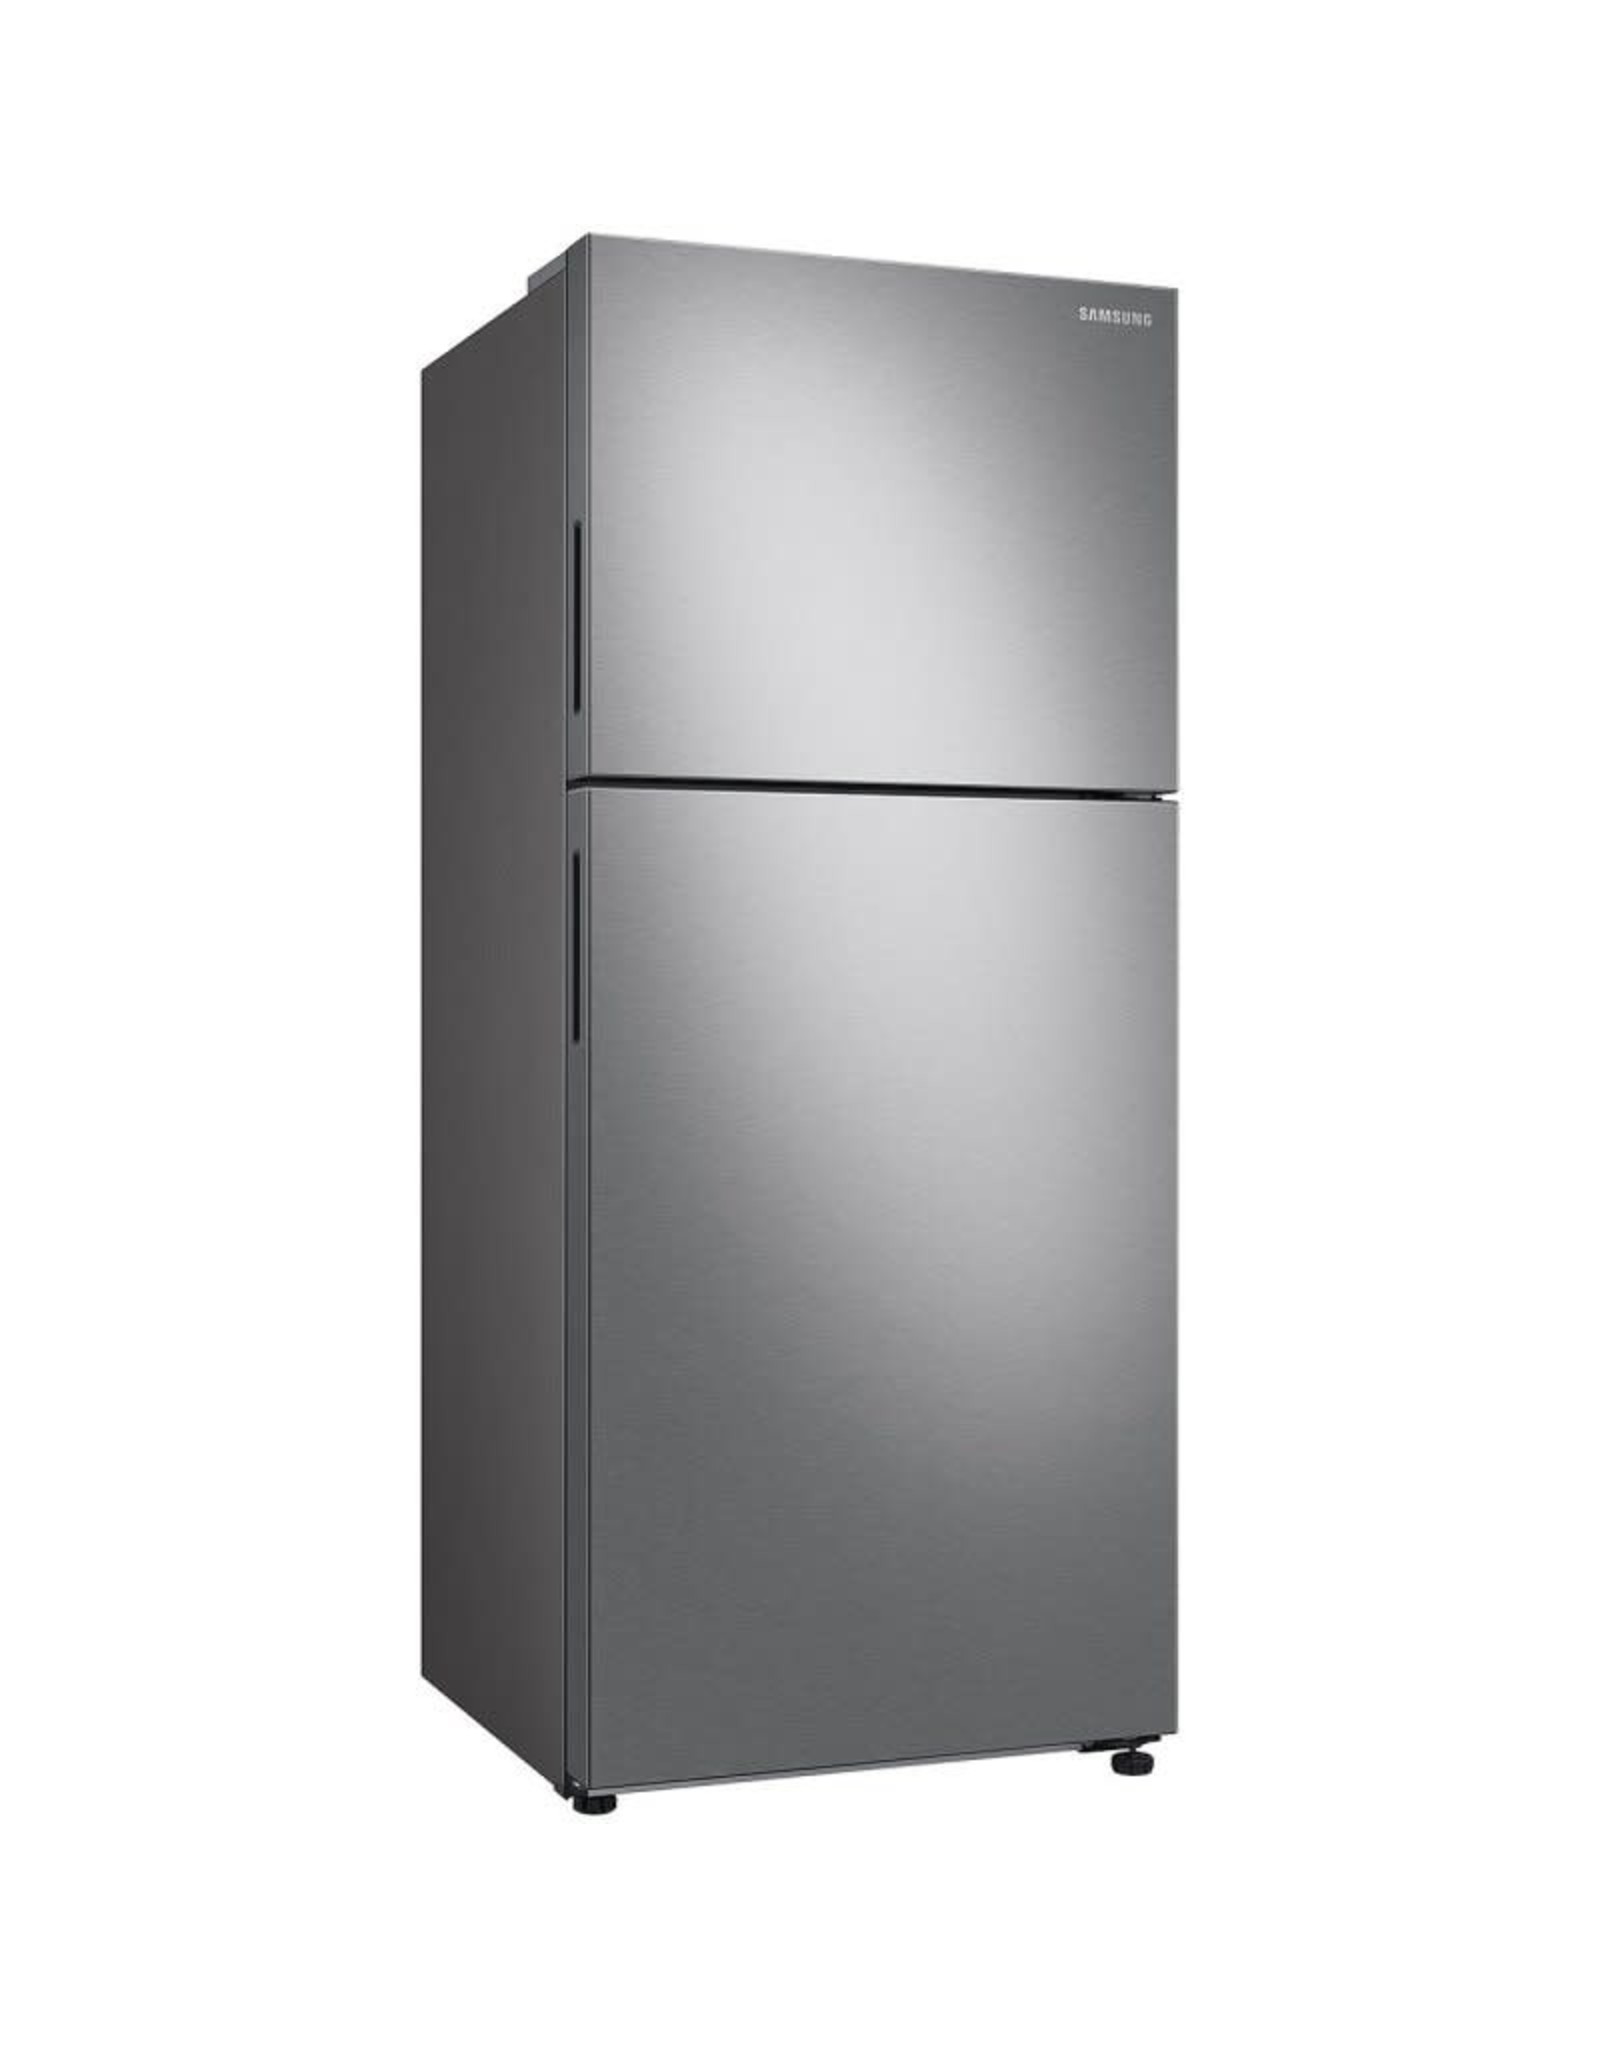 SAMSUNG RT16A6195SR  15.6 cu. ft. Top Freezer Refrigerator in Stainless Steel, Standard